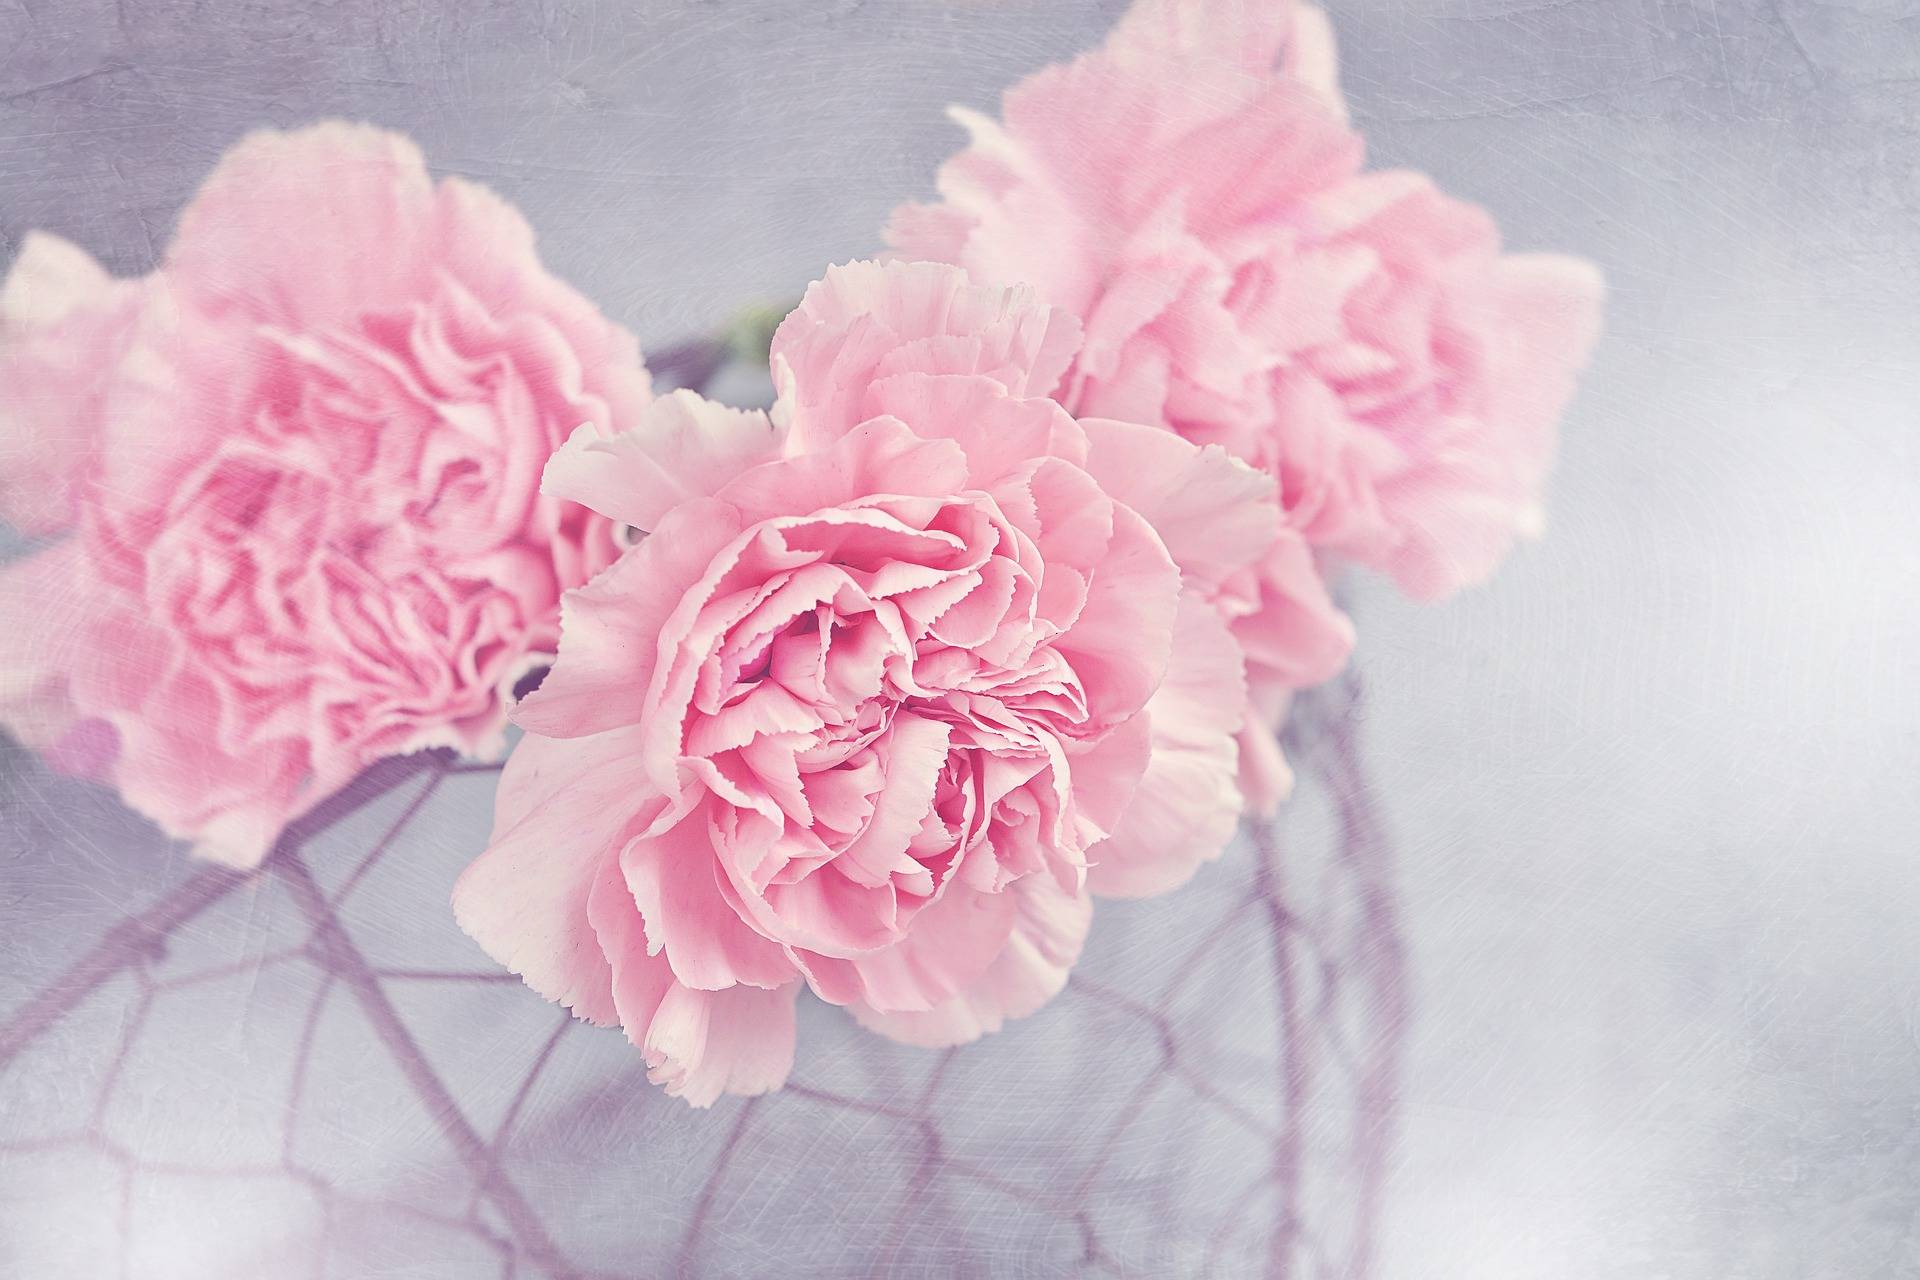 three pink carnation flowers